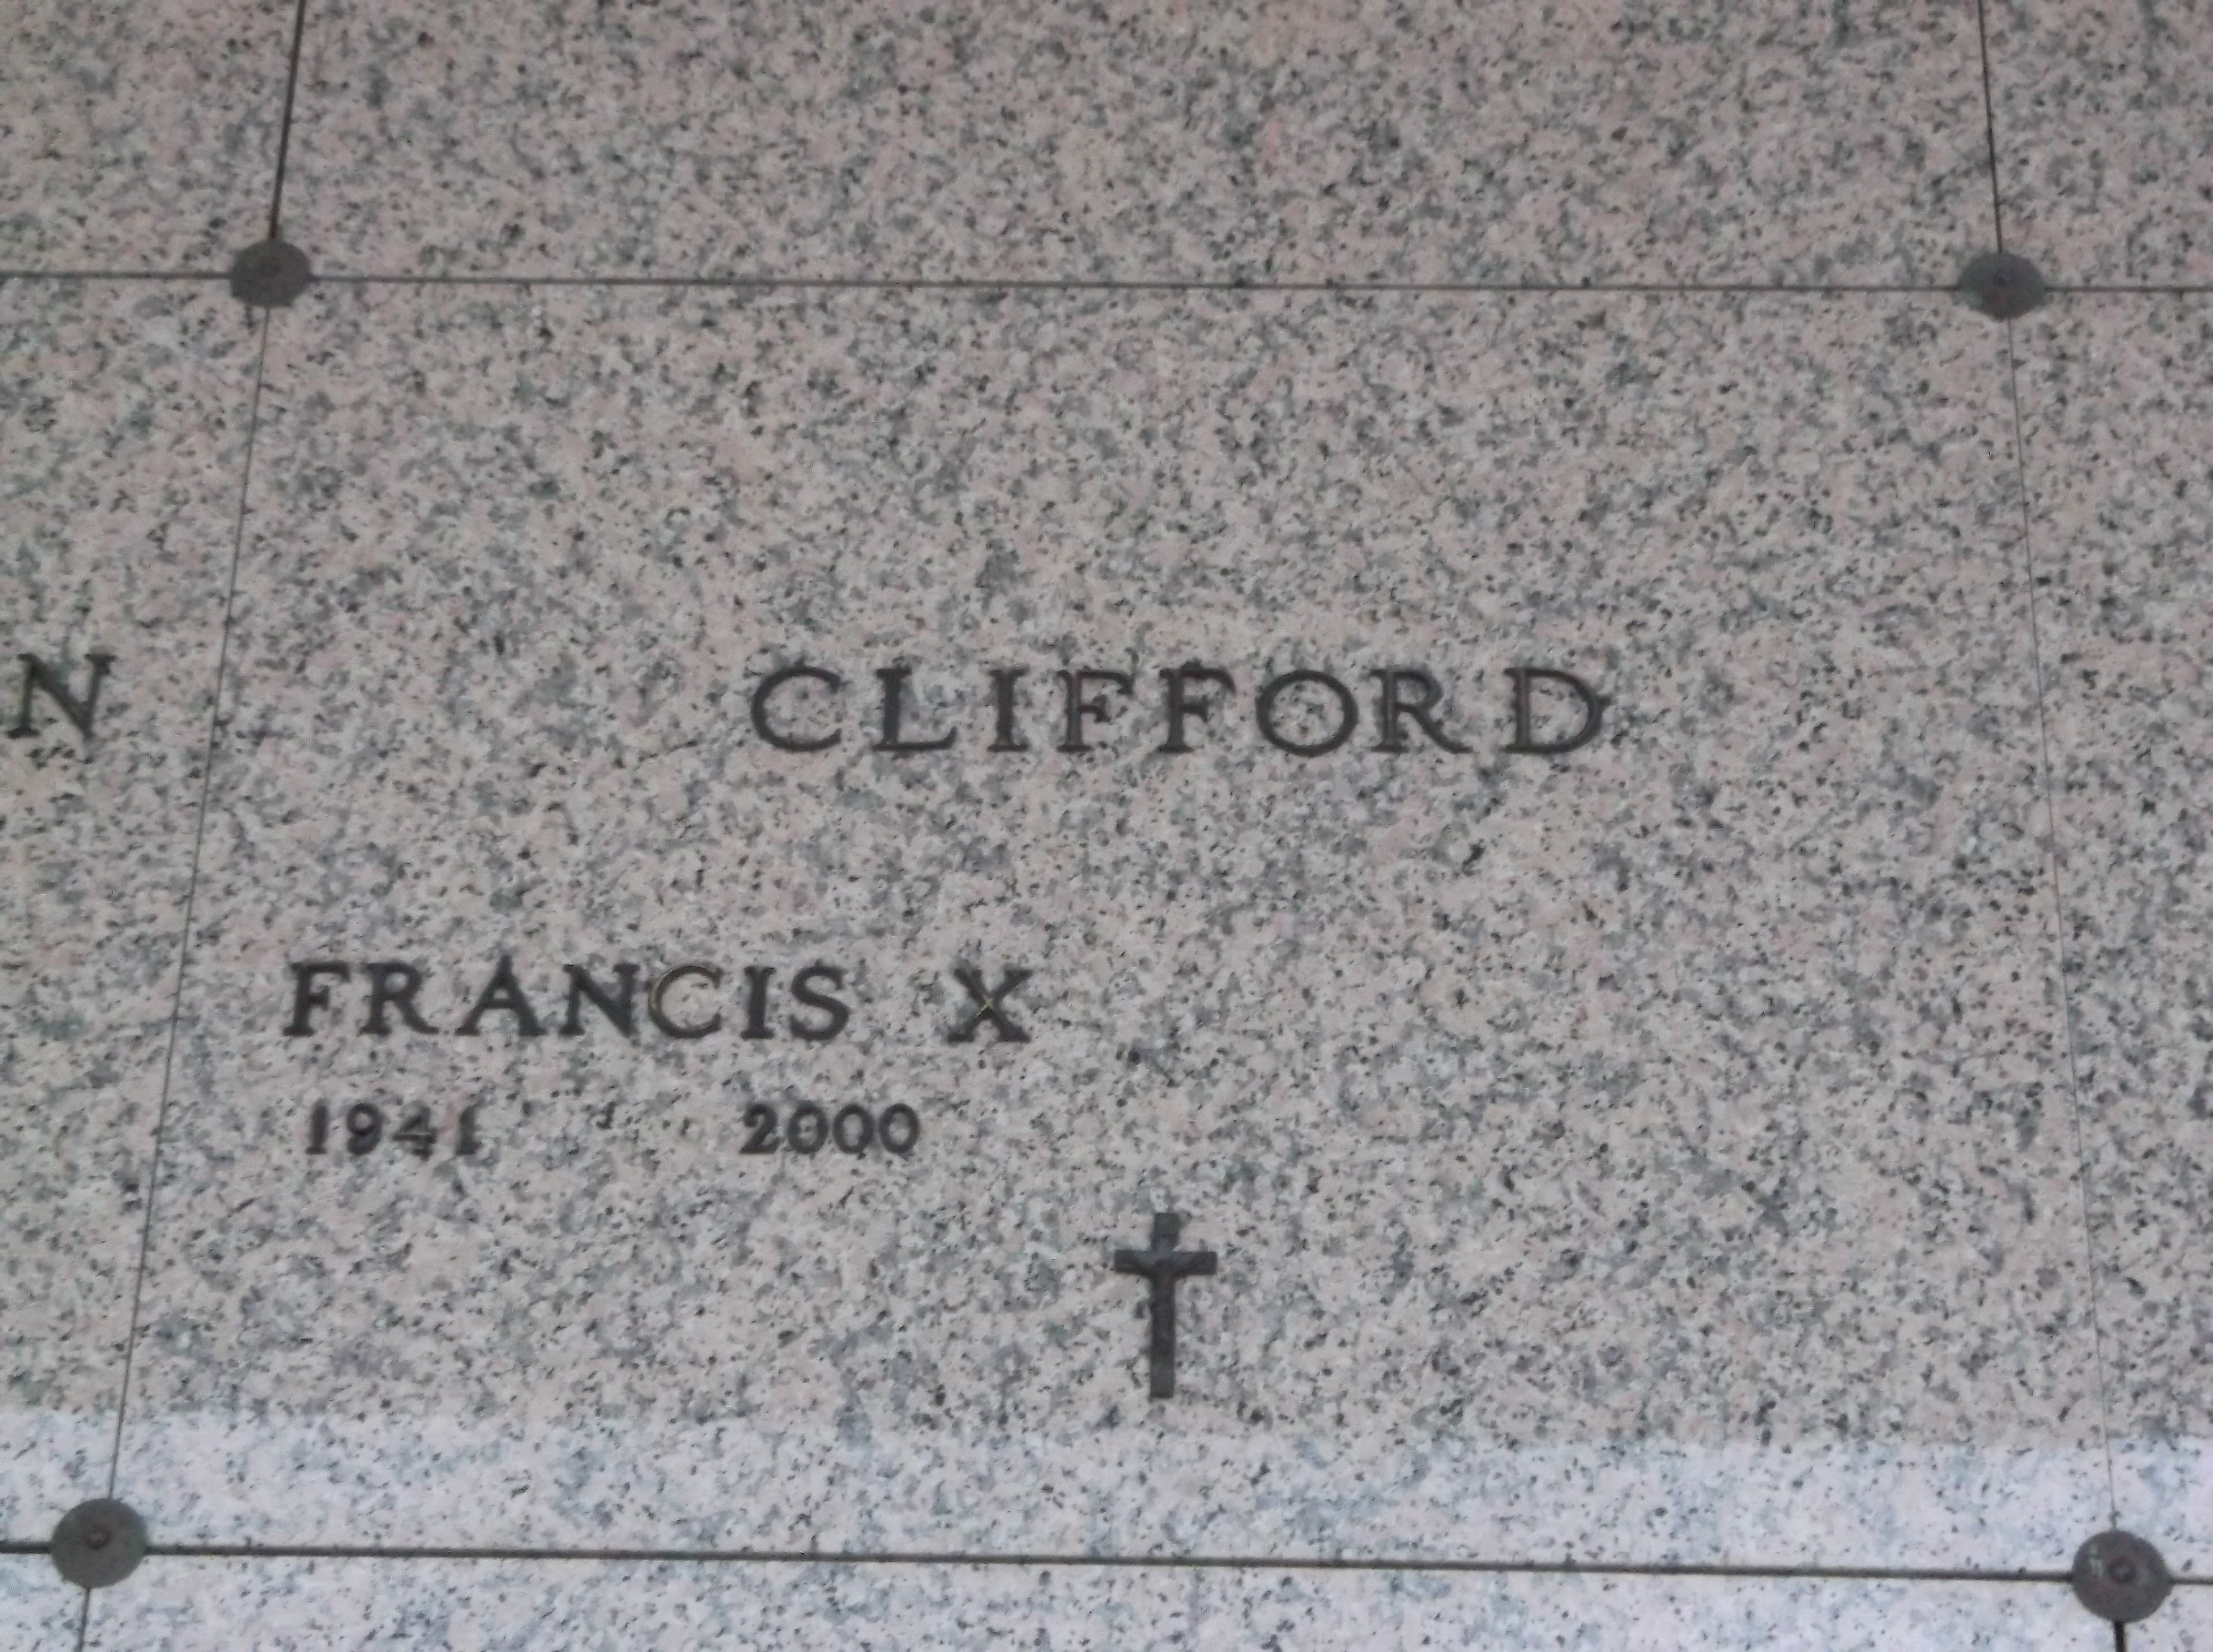 Francis X Clifford